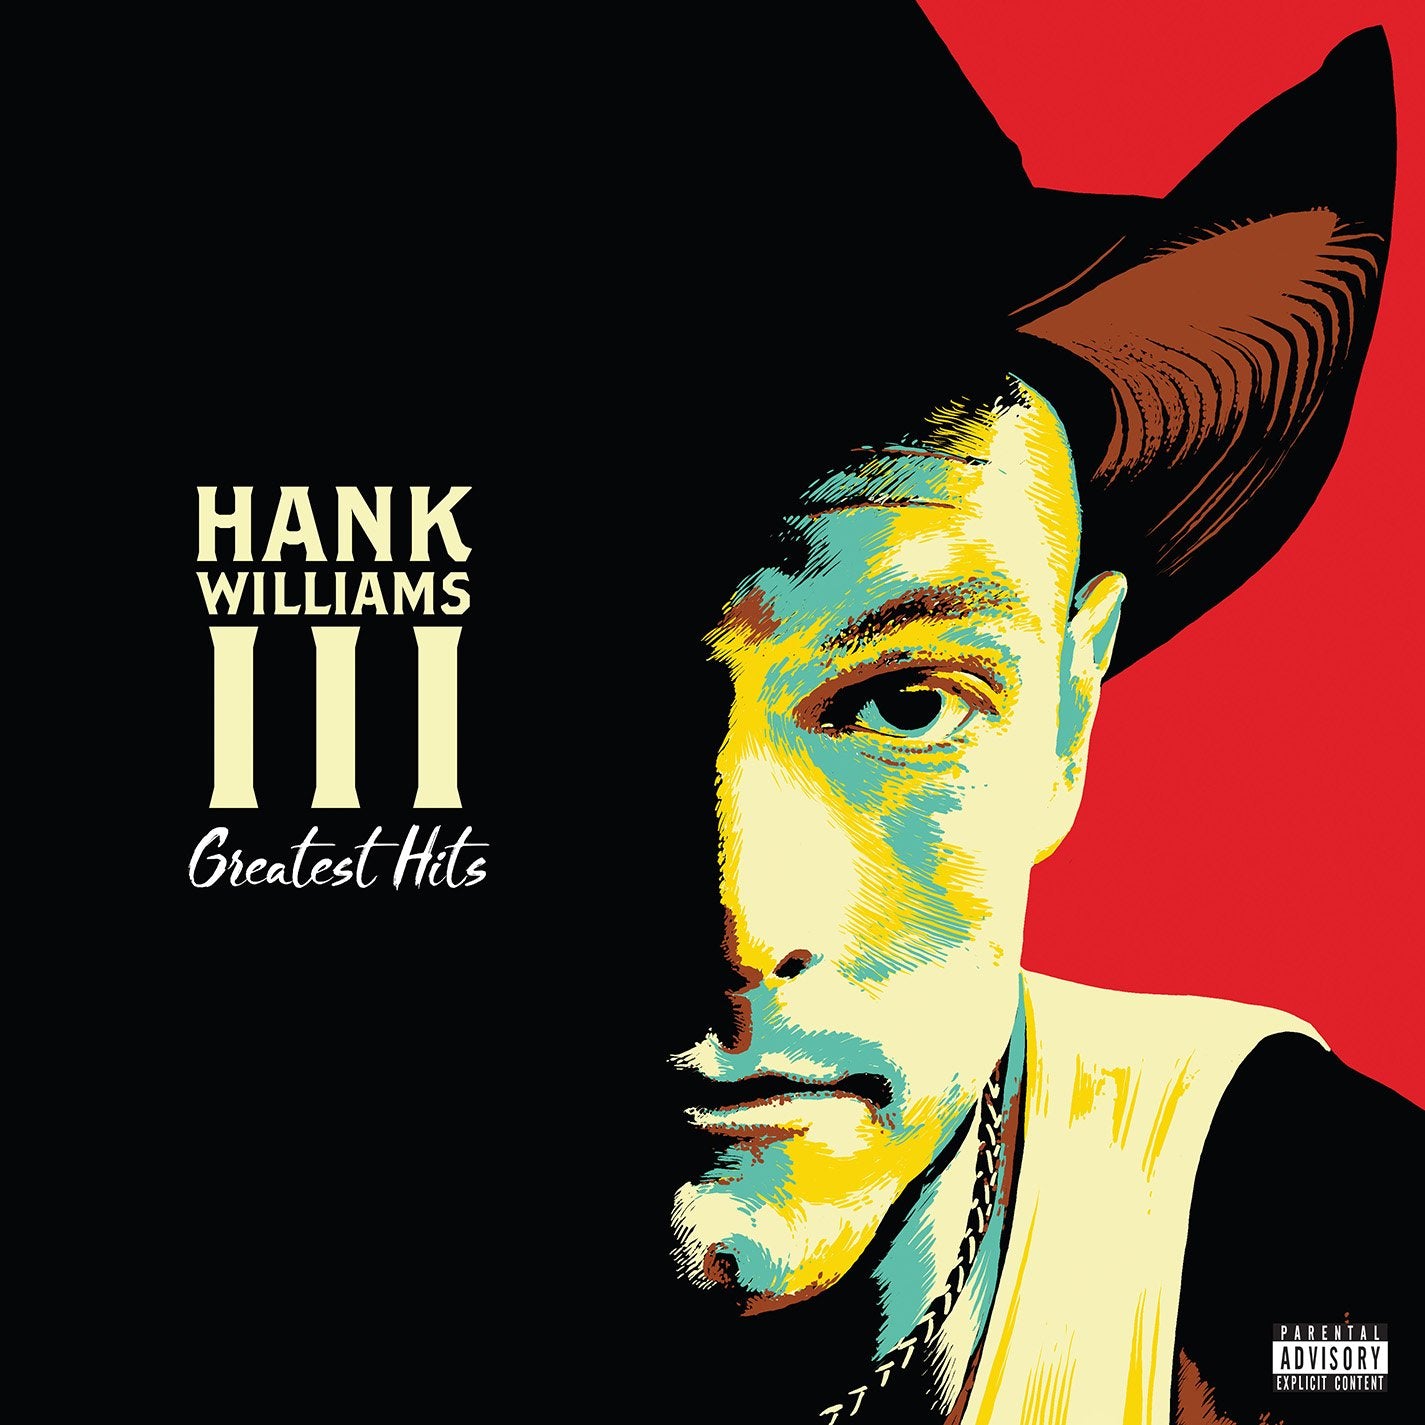 hank-williams-iii-greatest-hits-vinyl-record-album-front